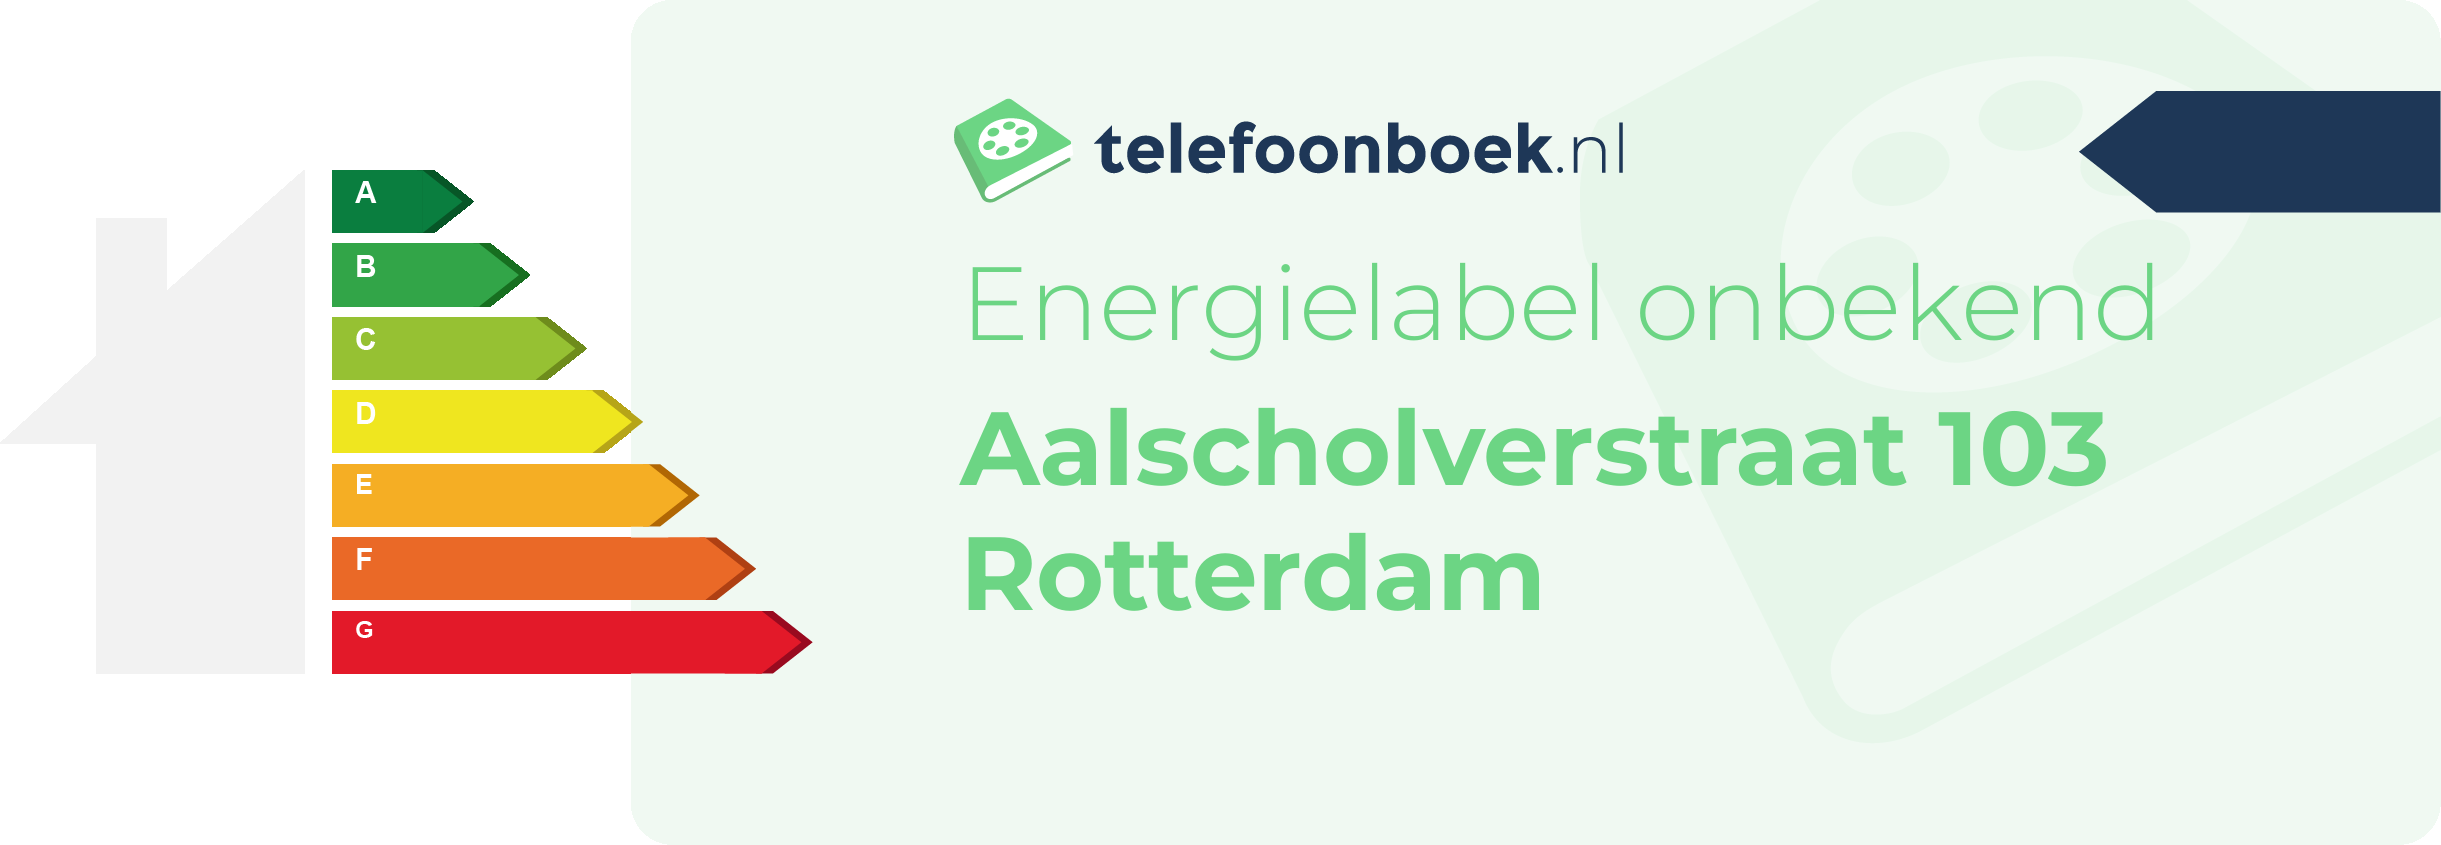 Energielabel Aalscholverstraat 103 Rotterdam